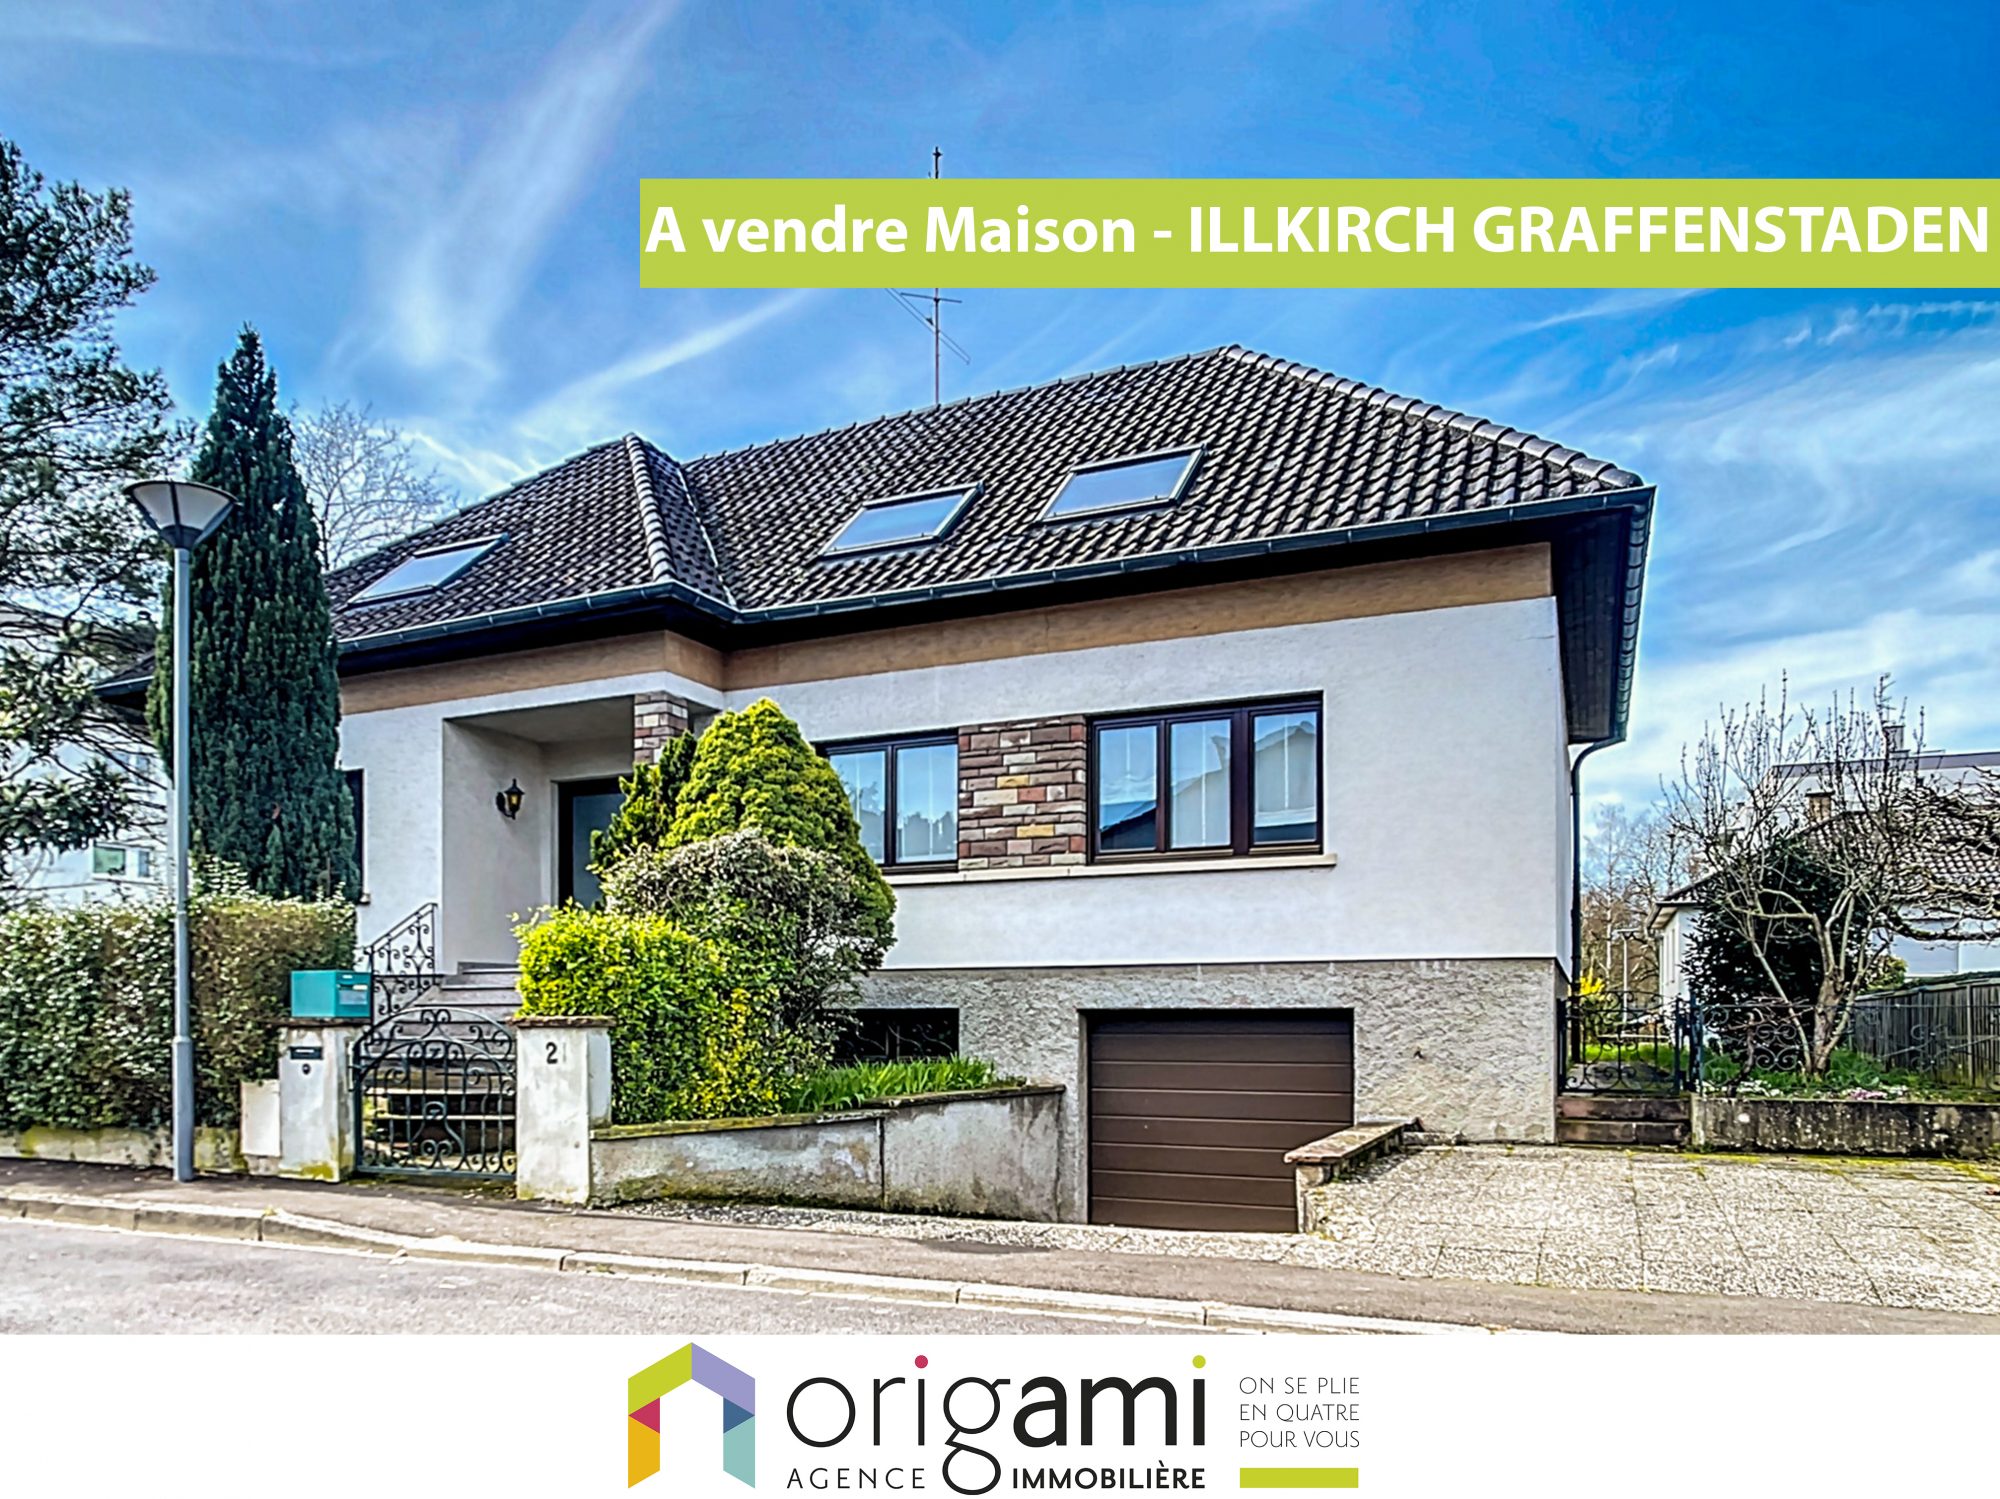 Vente Maison 171m² 6 Pièces à Illkirch-Graffenstaden (67400) - Origami